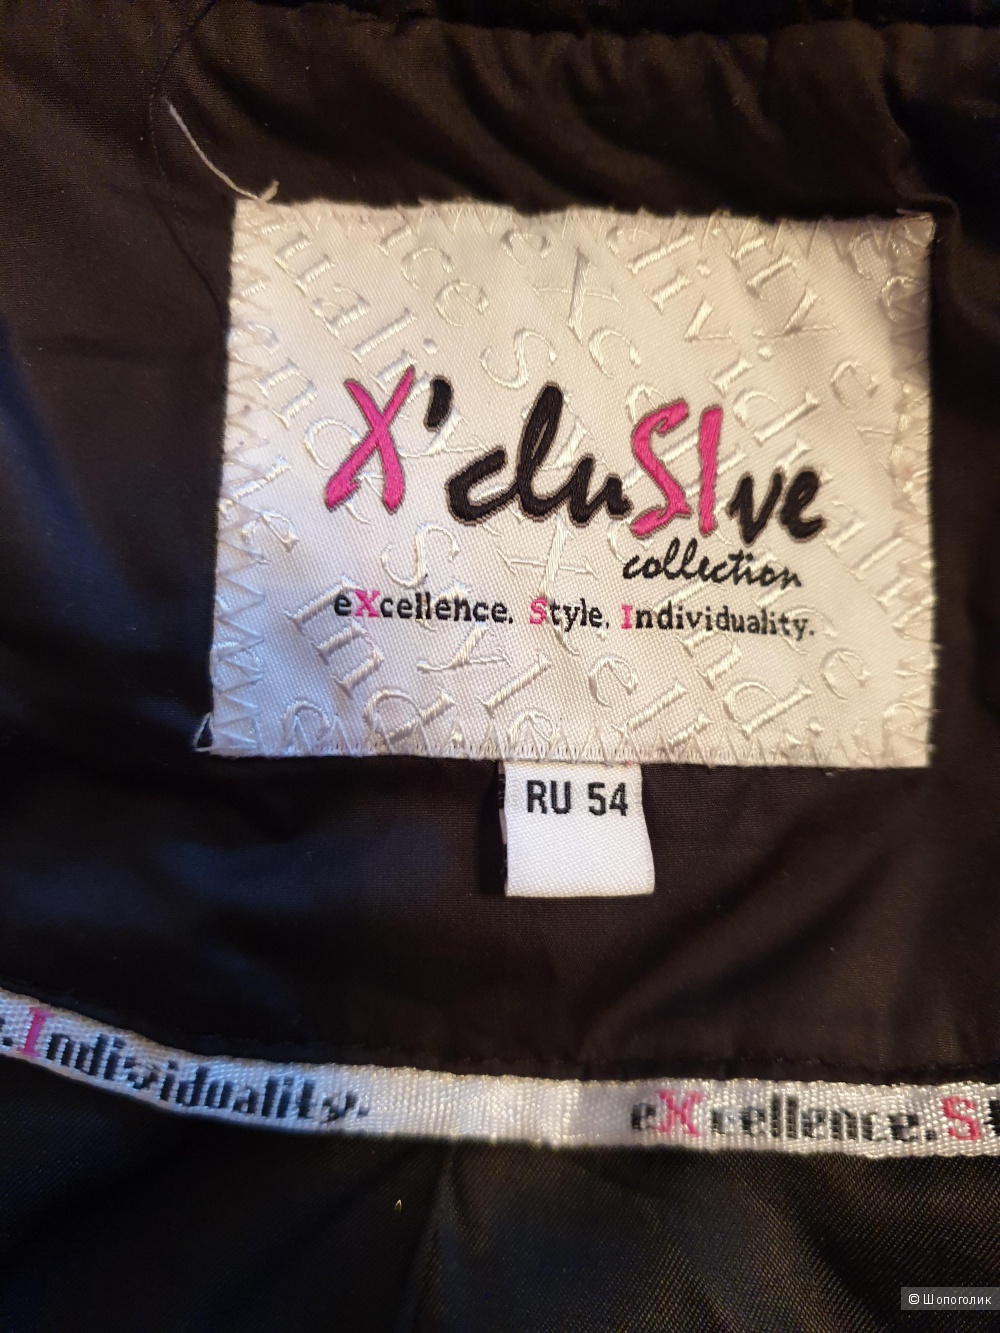 Пальто фирма  Х" cluSIve collection 54 размер